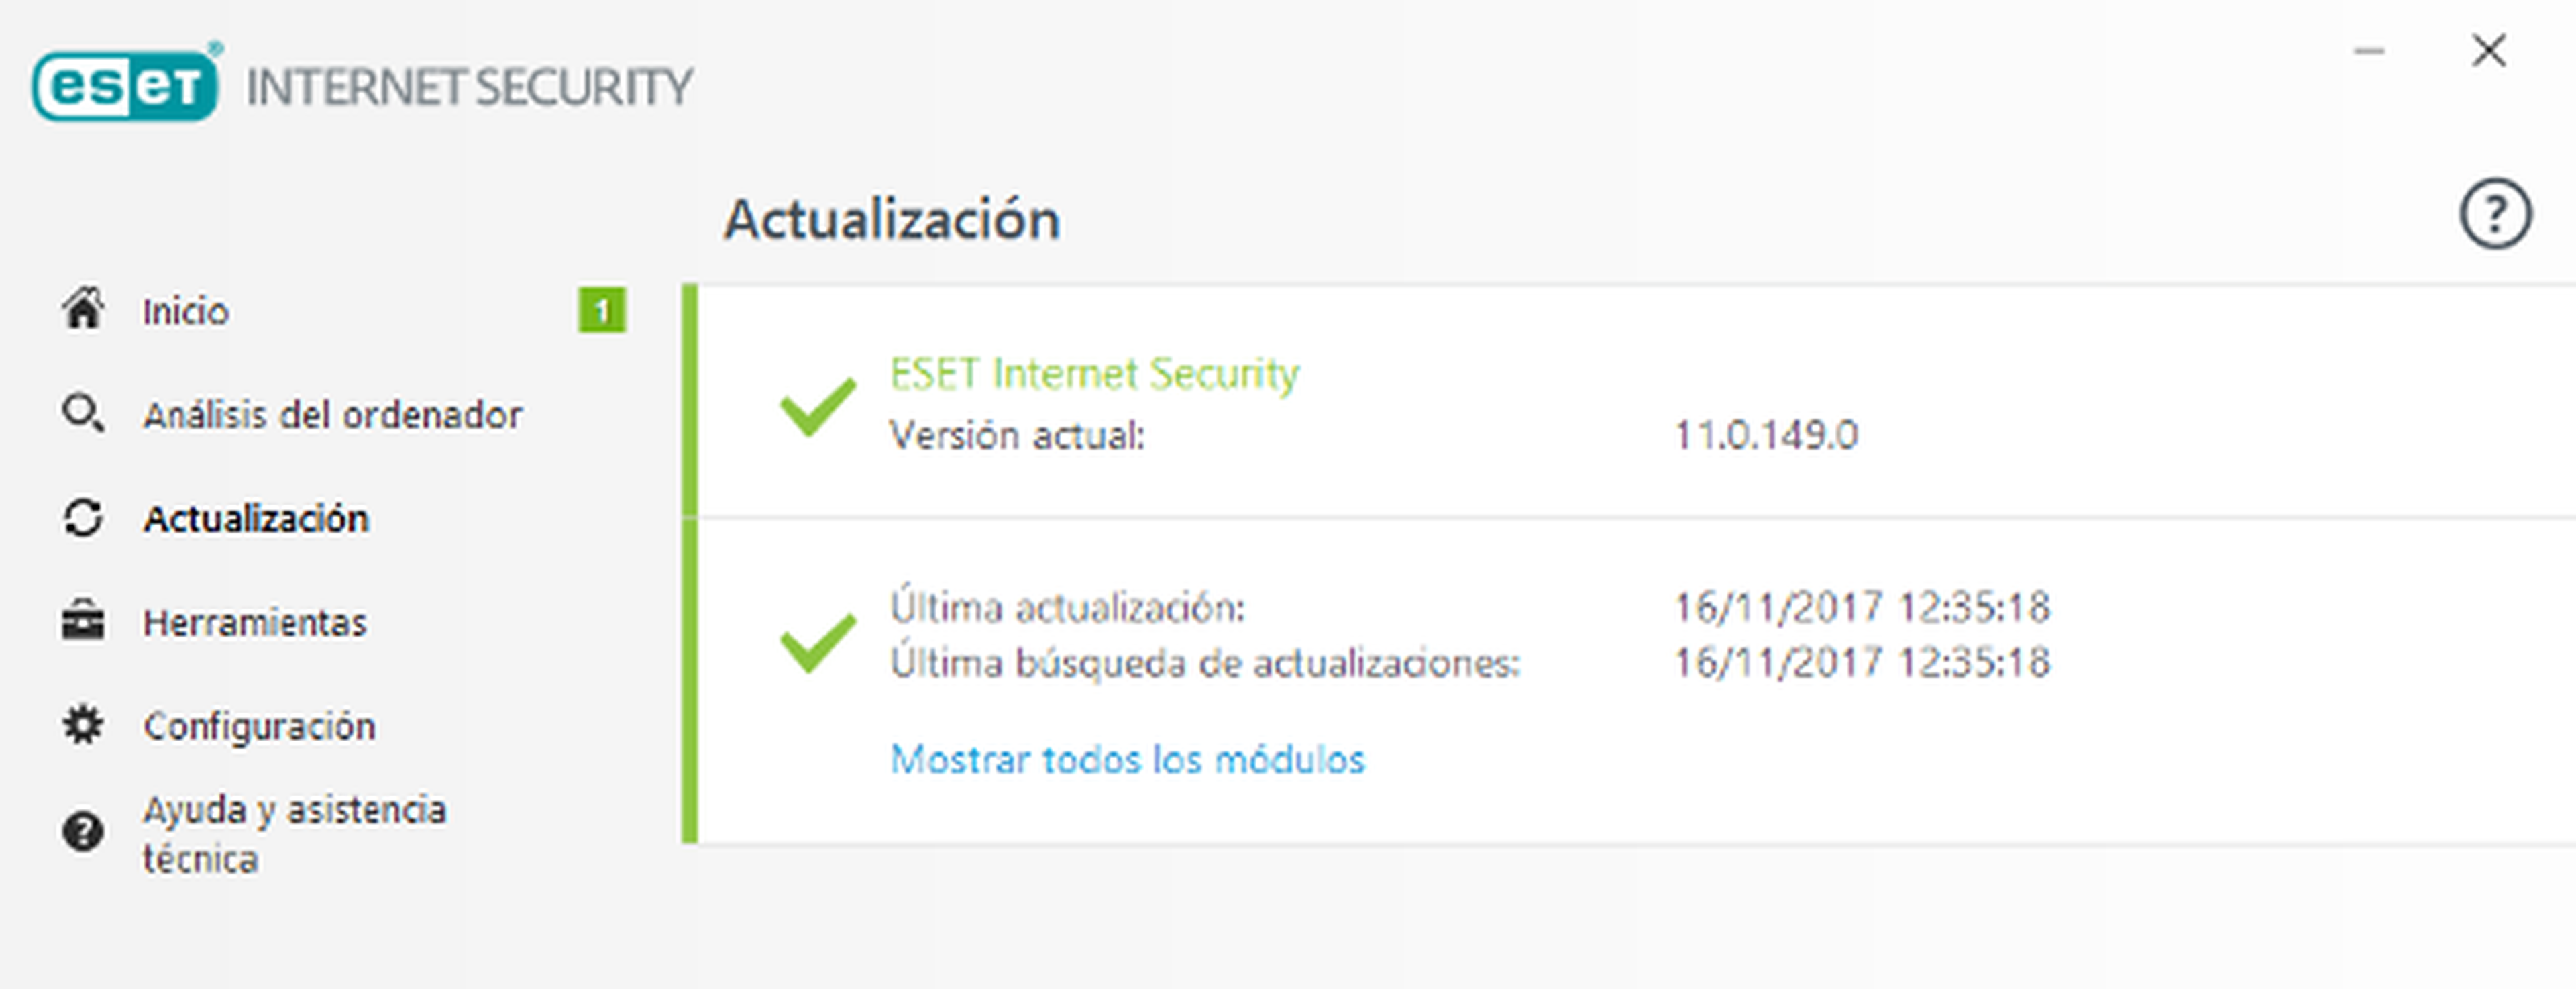 ESET Internet Security 2018 Actualización